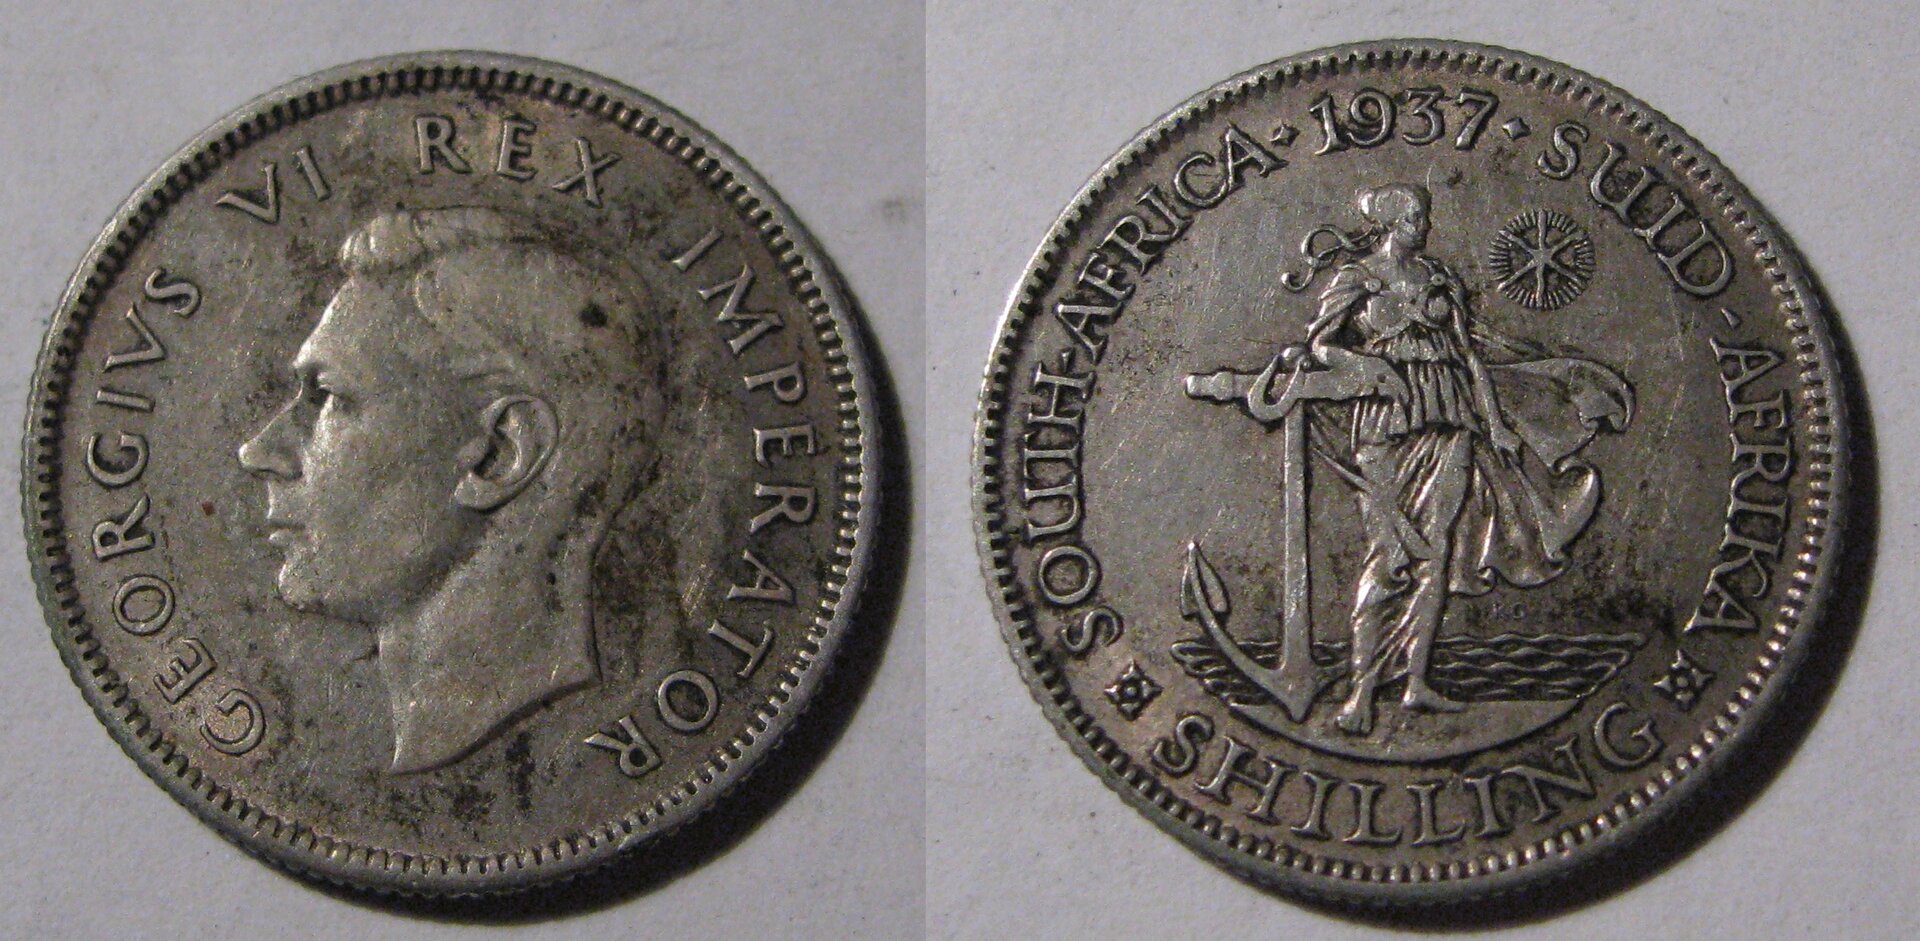 1937 South Africa Shilling.jpg